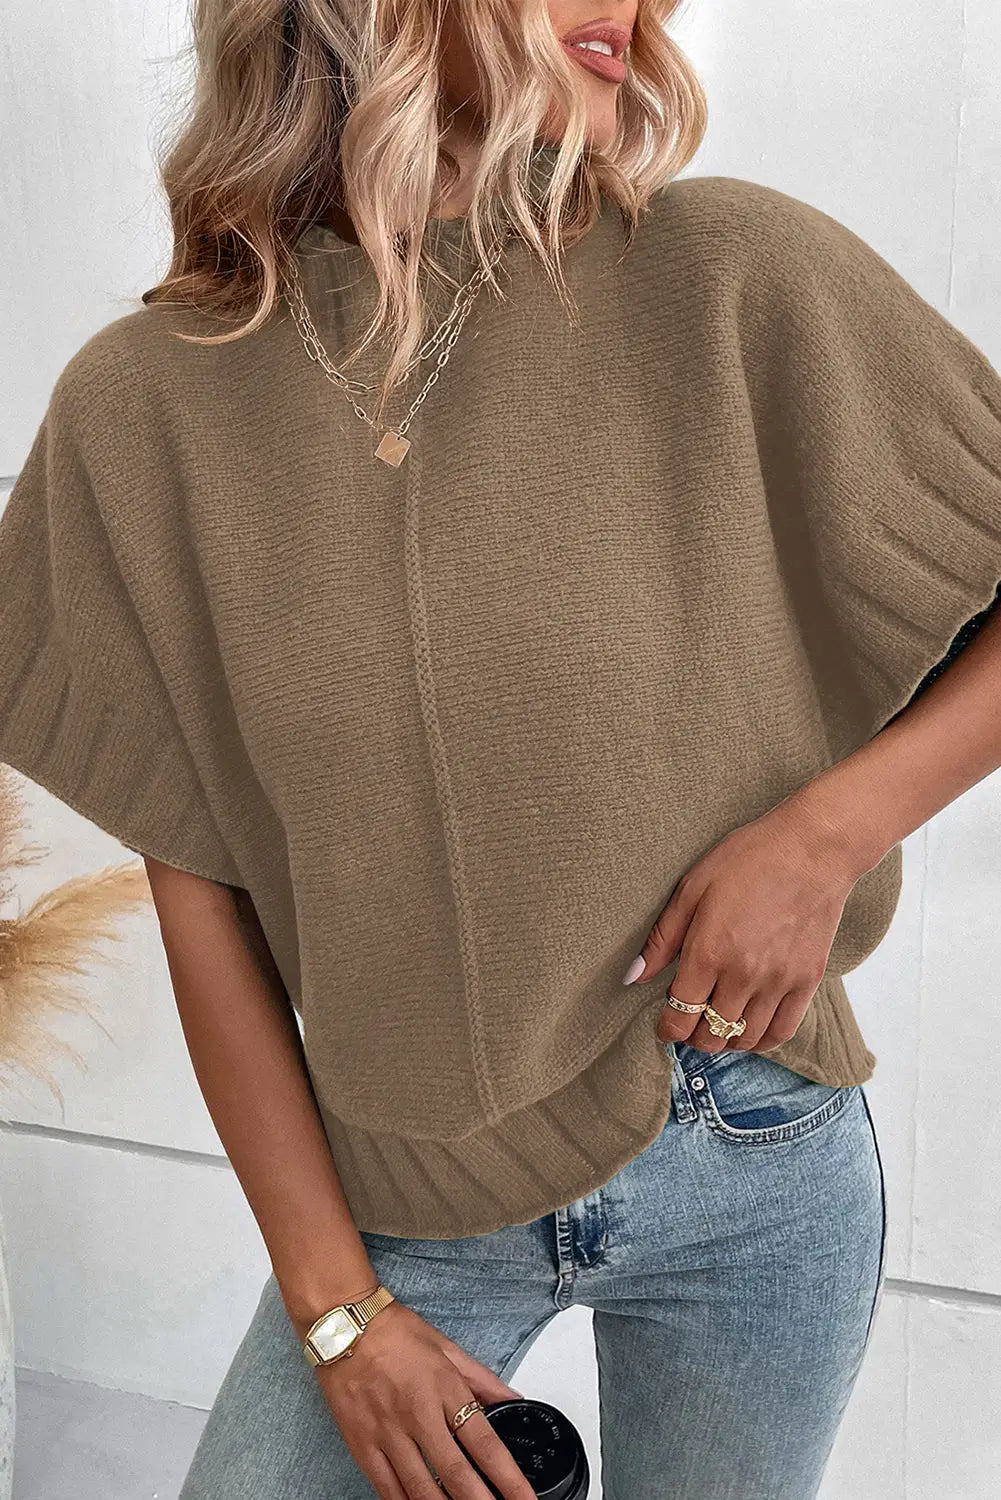 Desert palm mock neck batwing short sleeve knit sweater - l / 65% acrylic + 35% polyamide - sweaters & cardigans